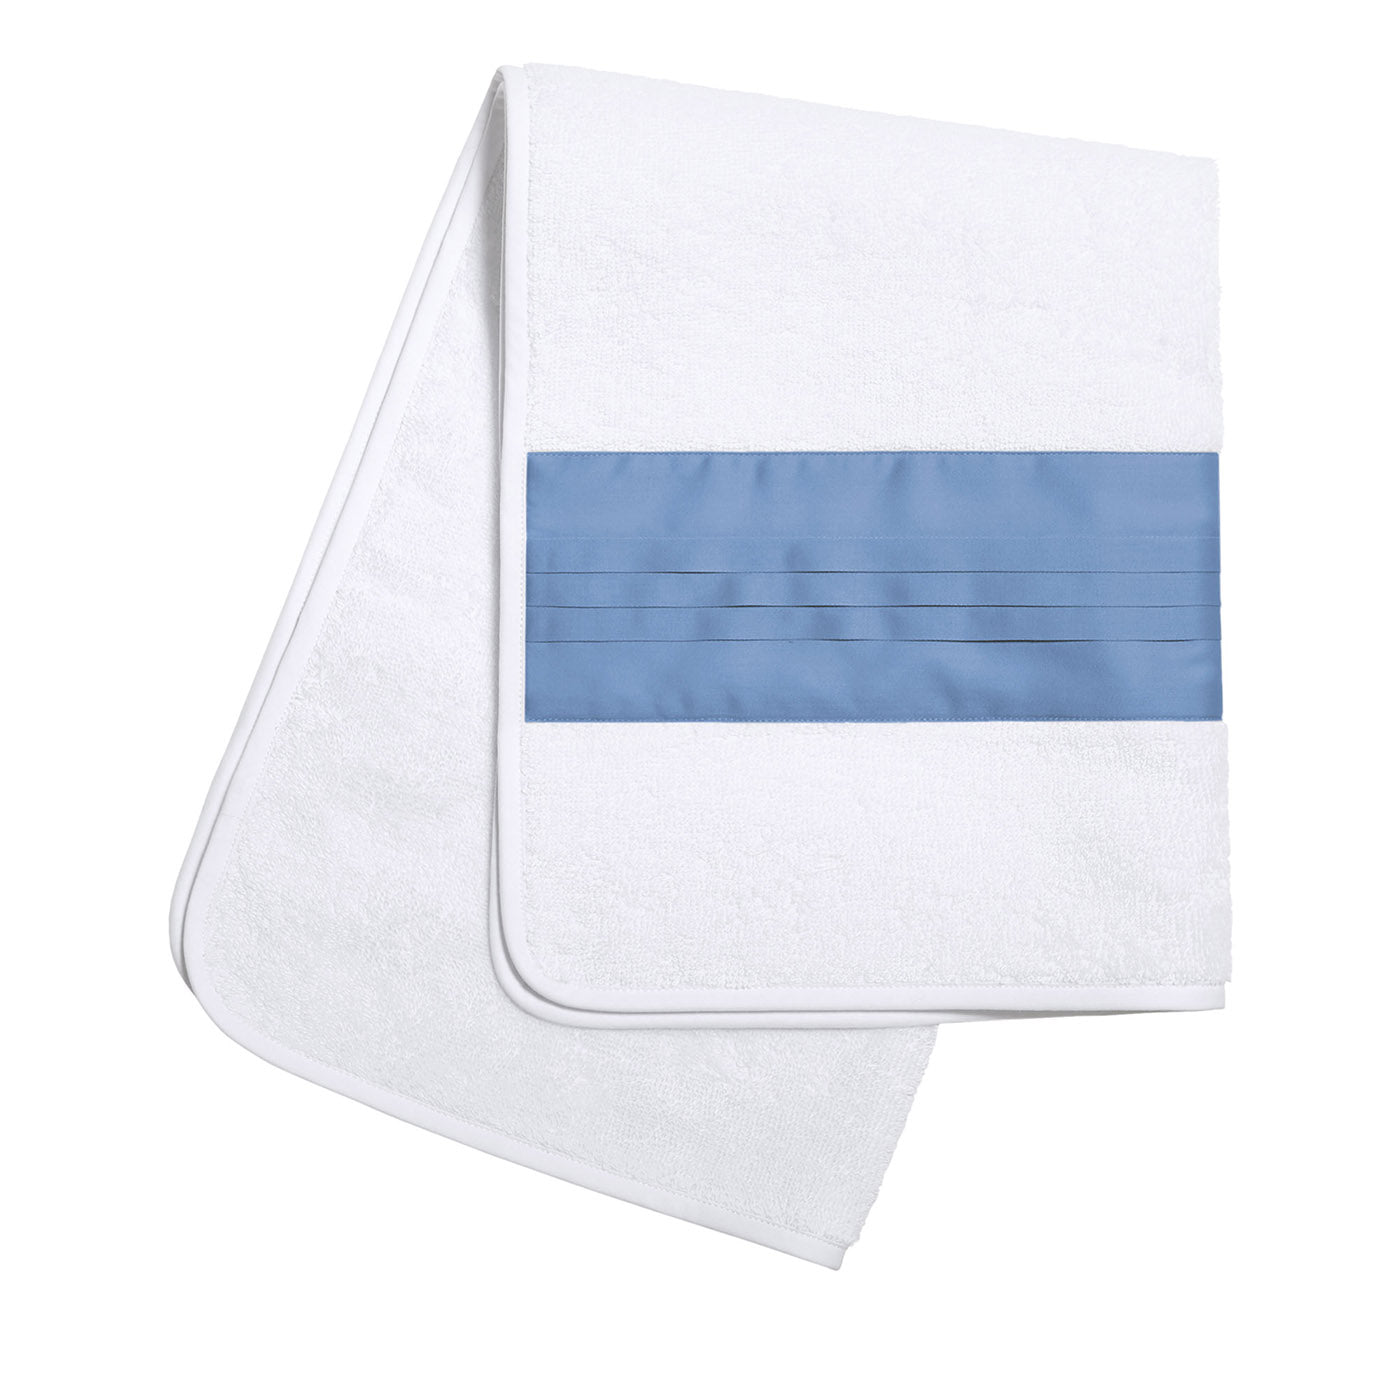 Plissè White & Country Blue Hand Towel - Main view